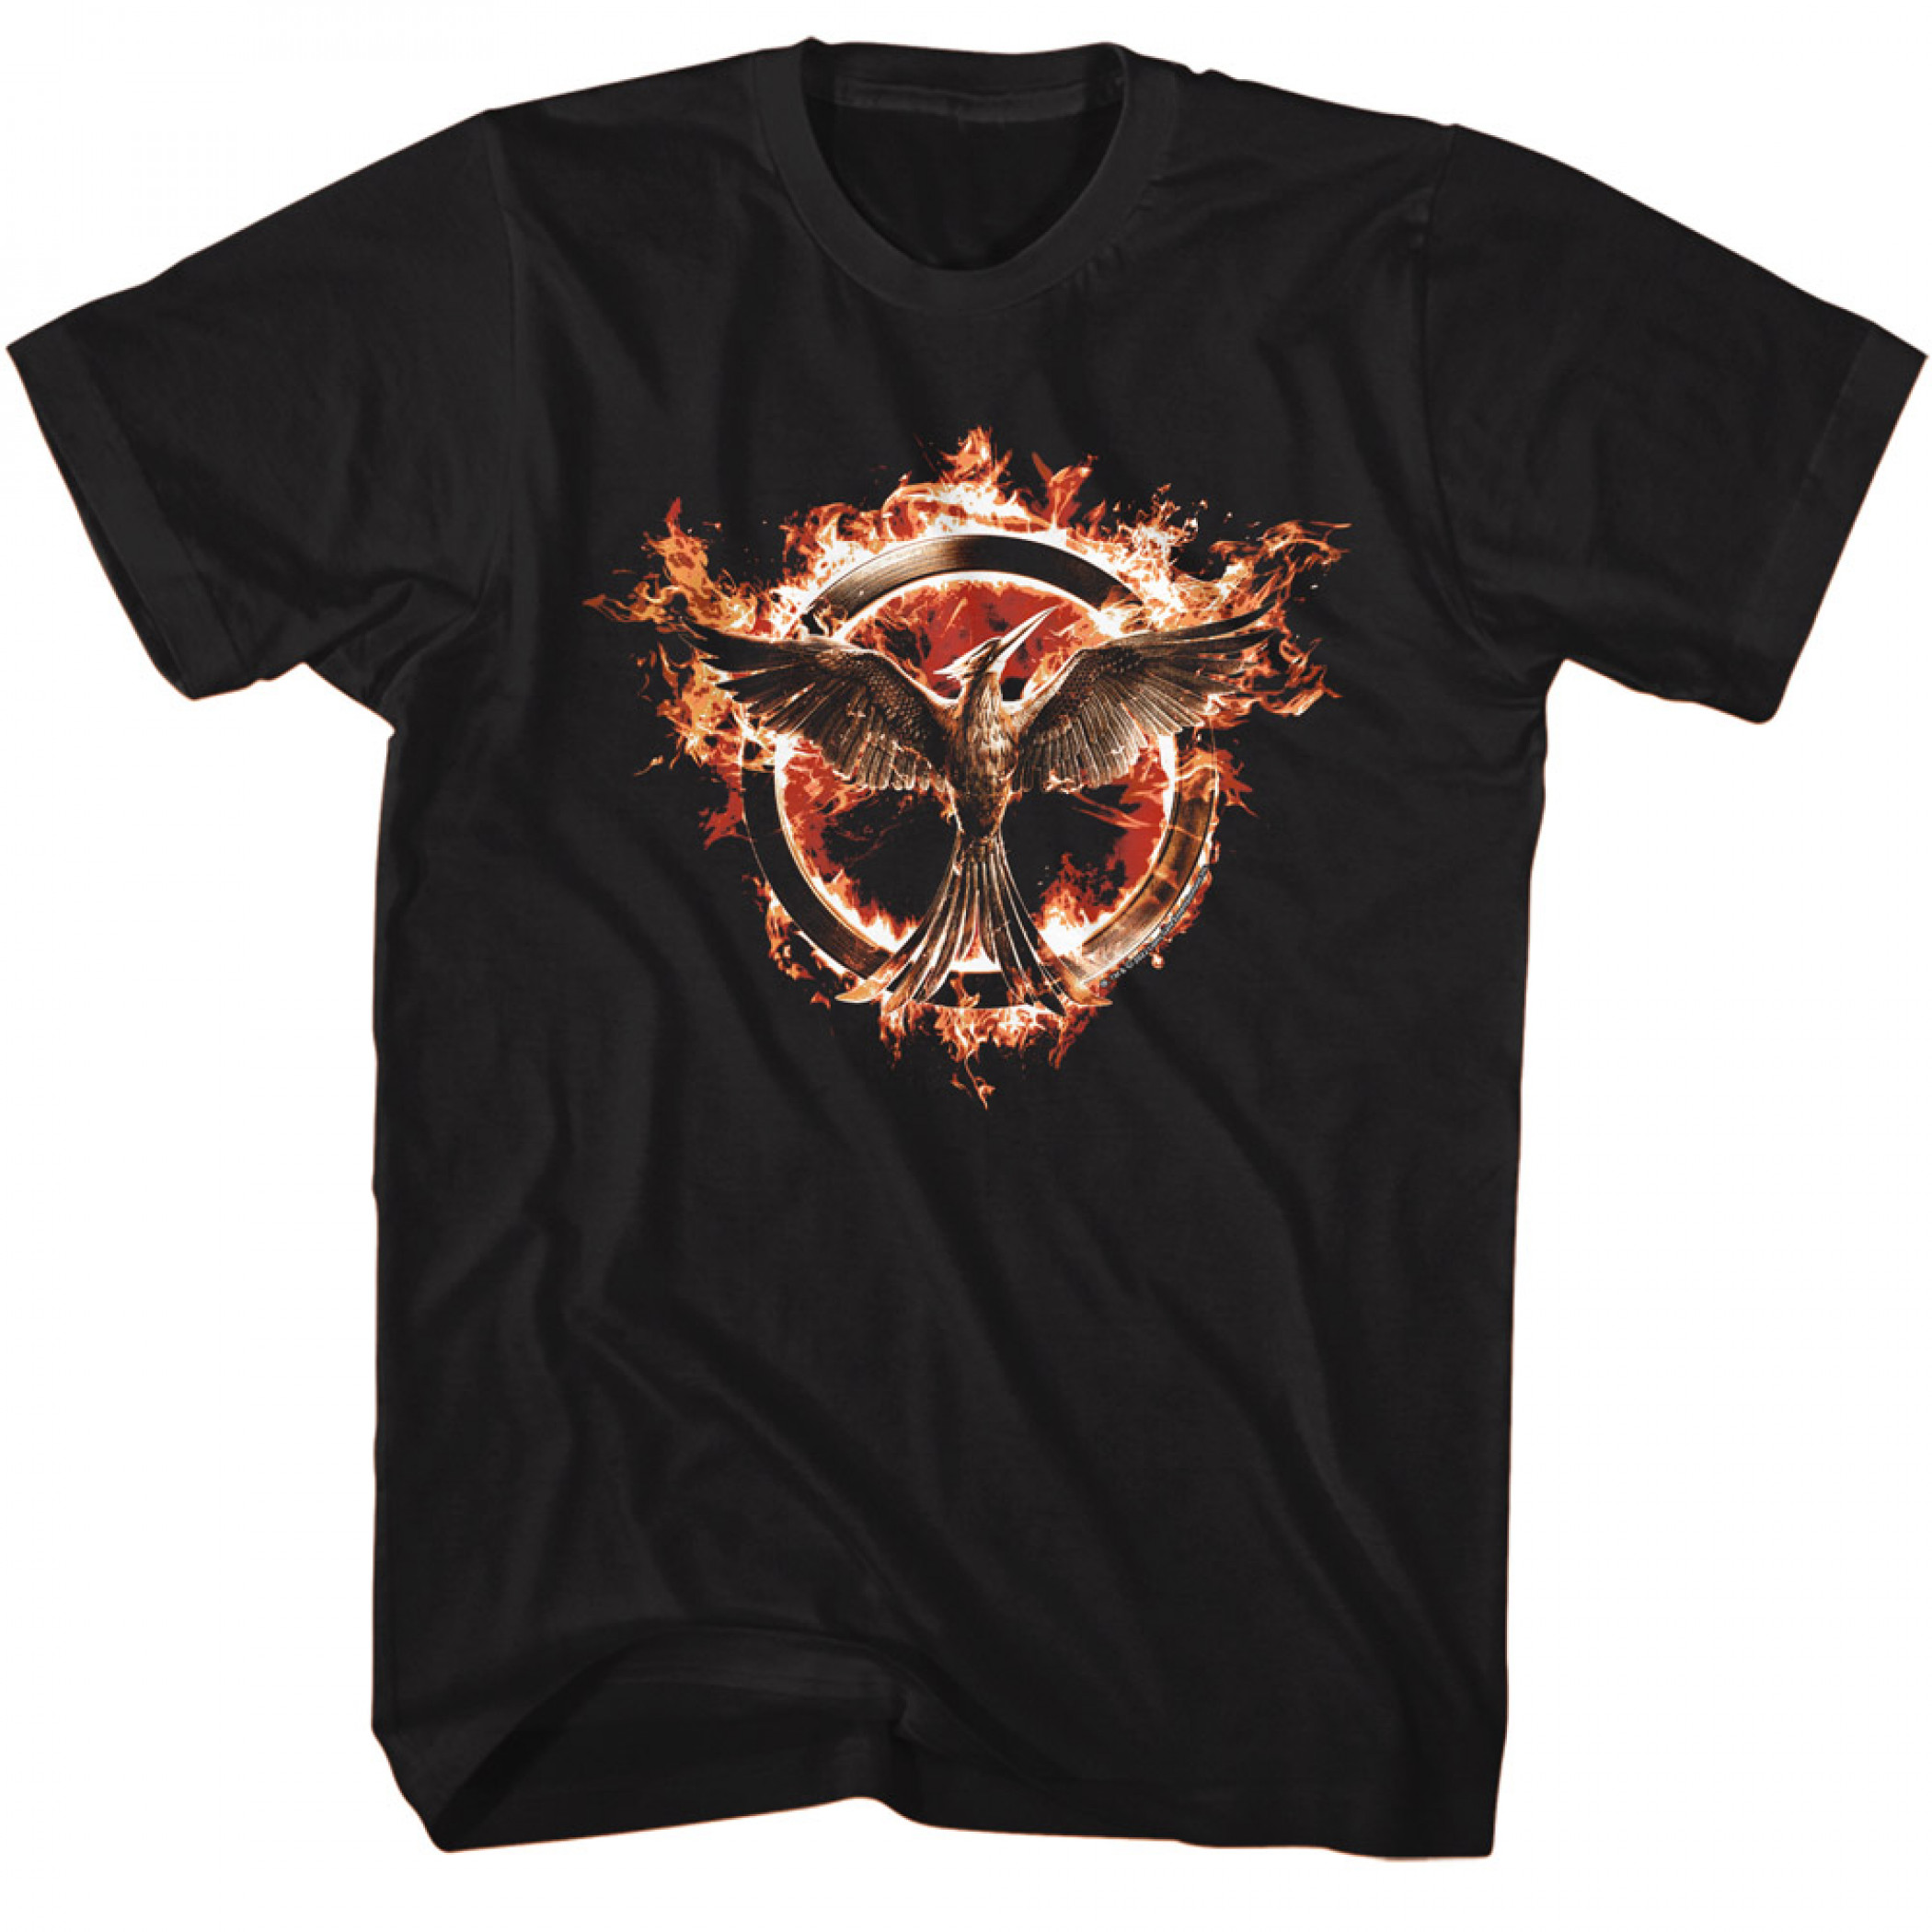 The Hunger Games Mockingjay Defiance Symbol T-Shirt